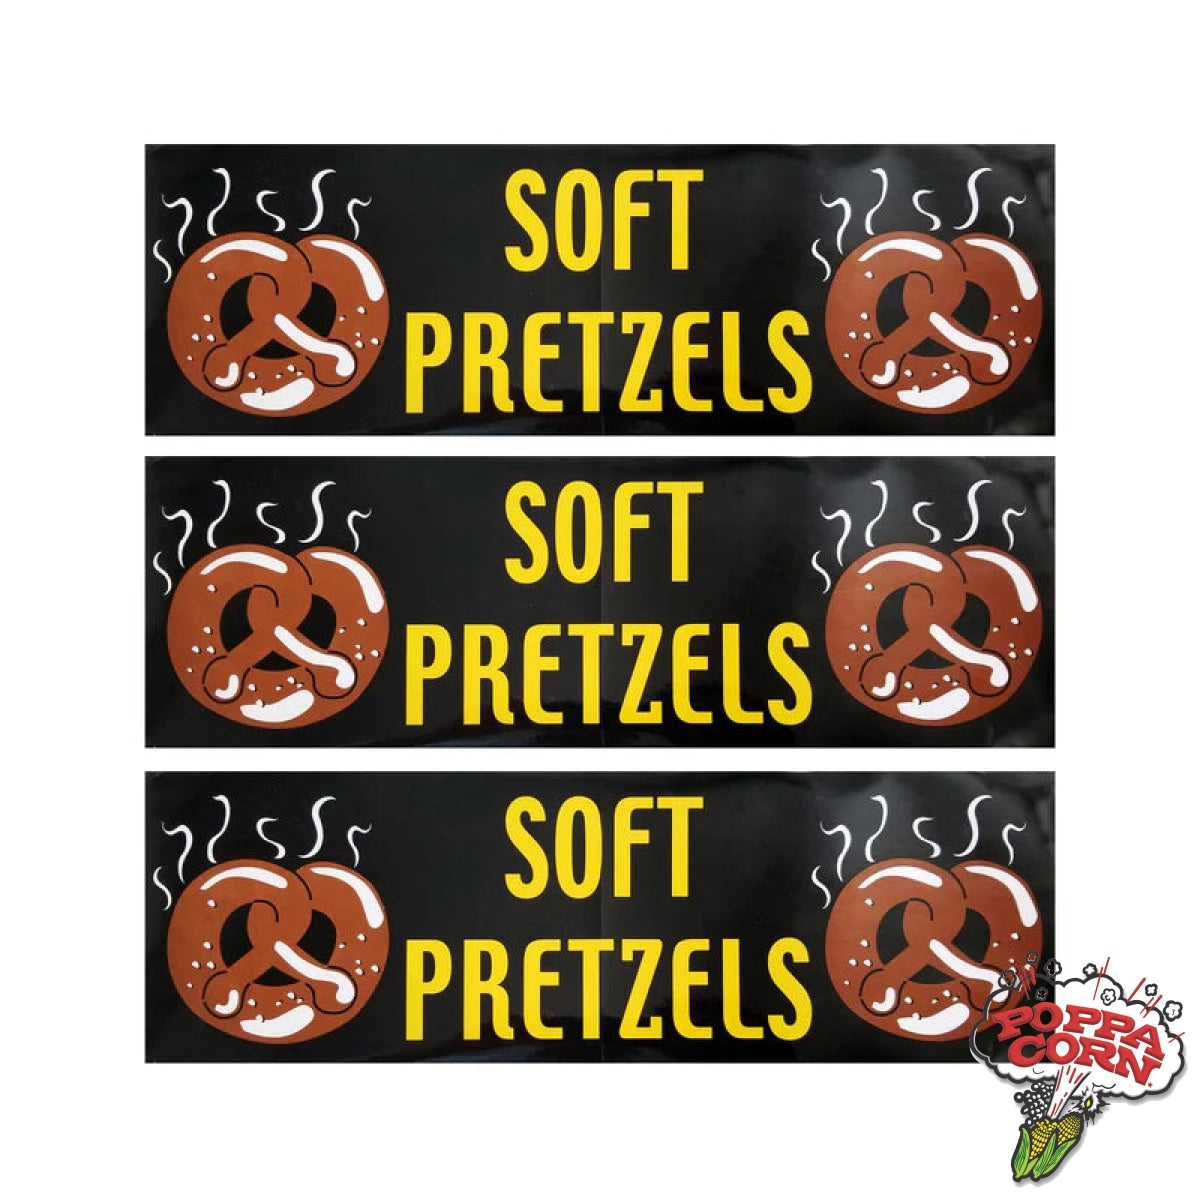 Pretzel Cabinet Kit for Model #5552-00-000 Oven/Cabinet Combos - GM5552-002 - Poppa Corn Corp